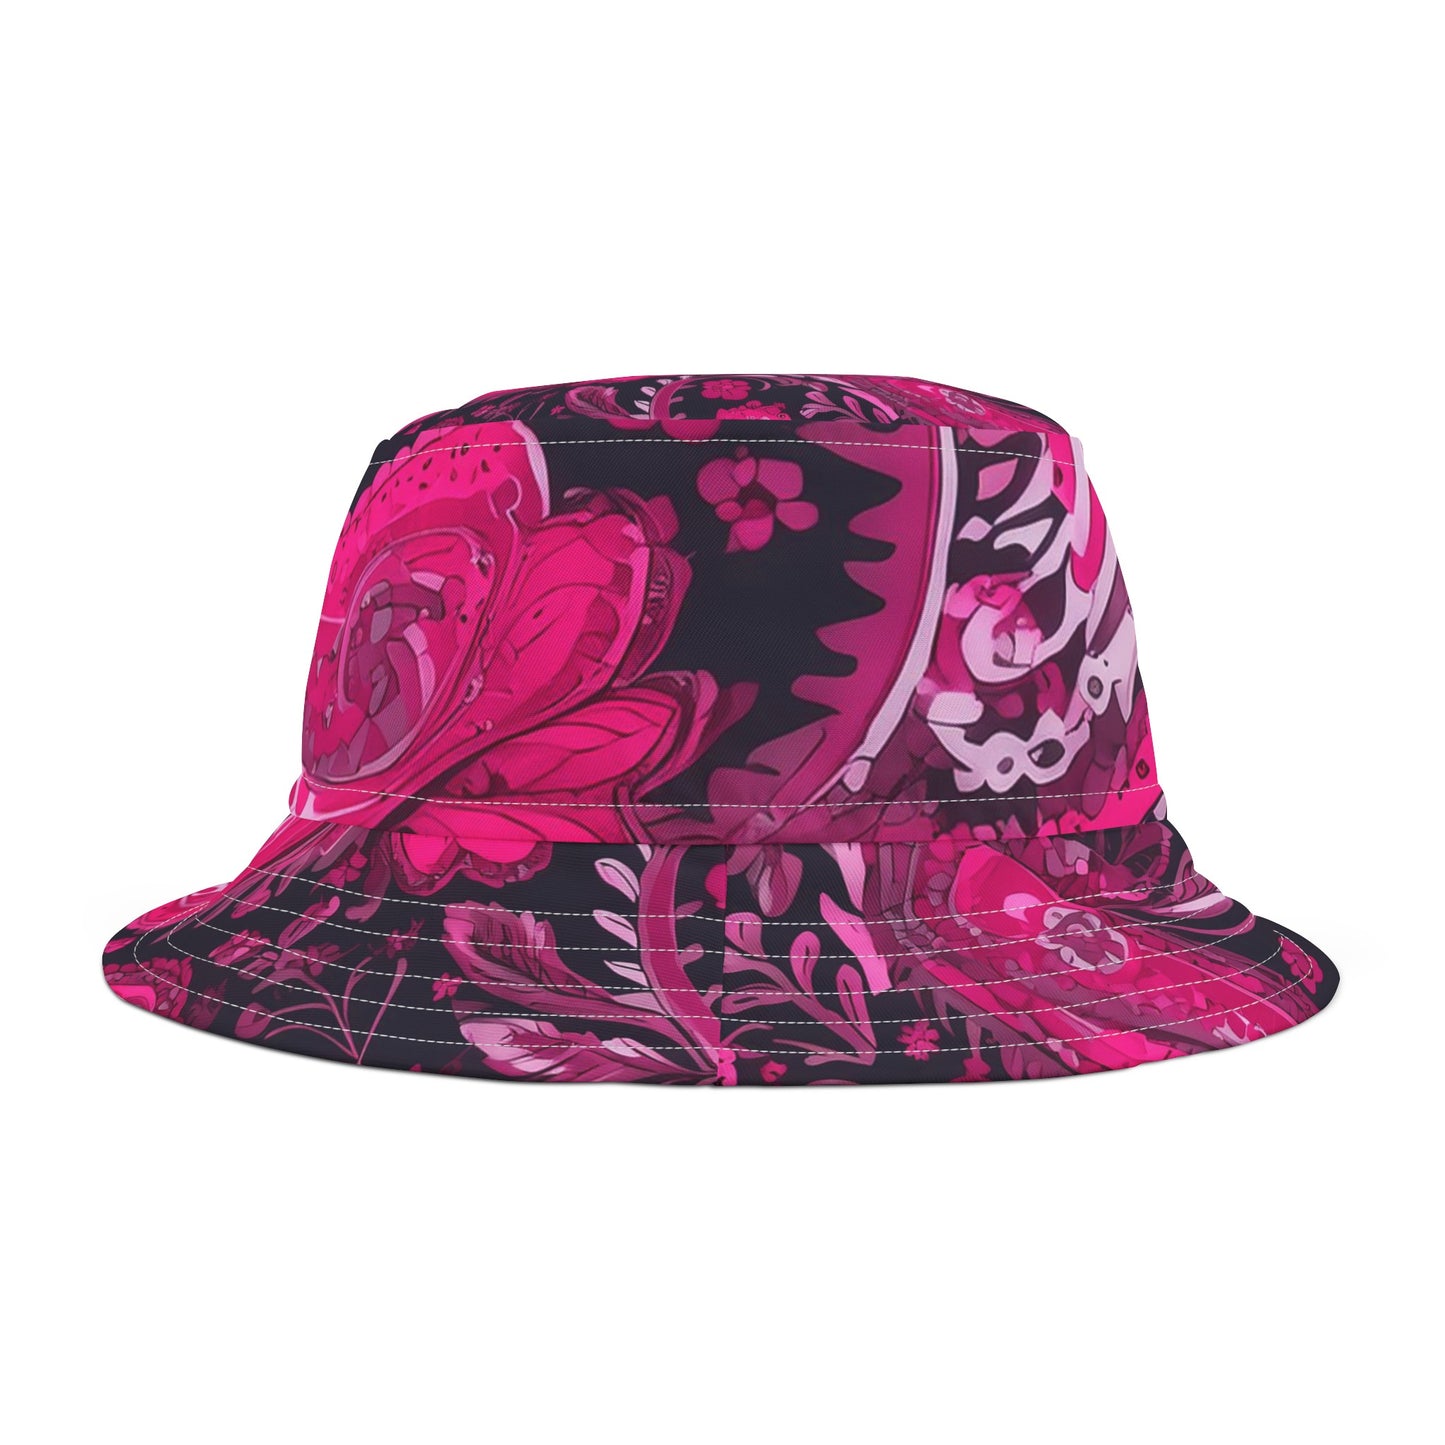 Vibrant Hot Pink Bucket Hat for Women